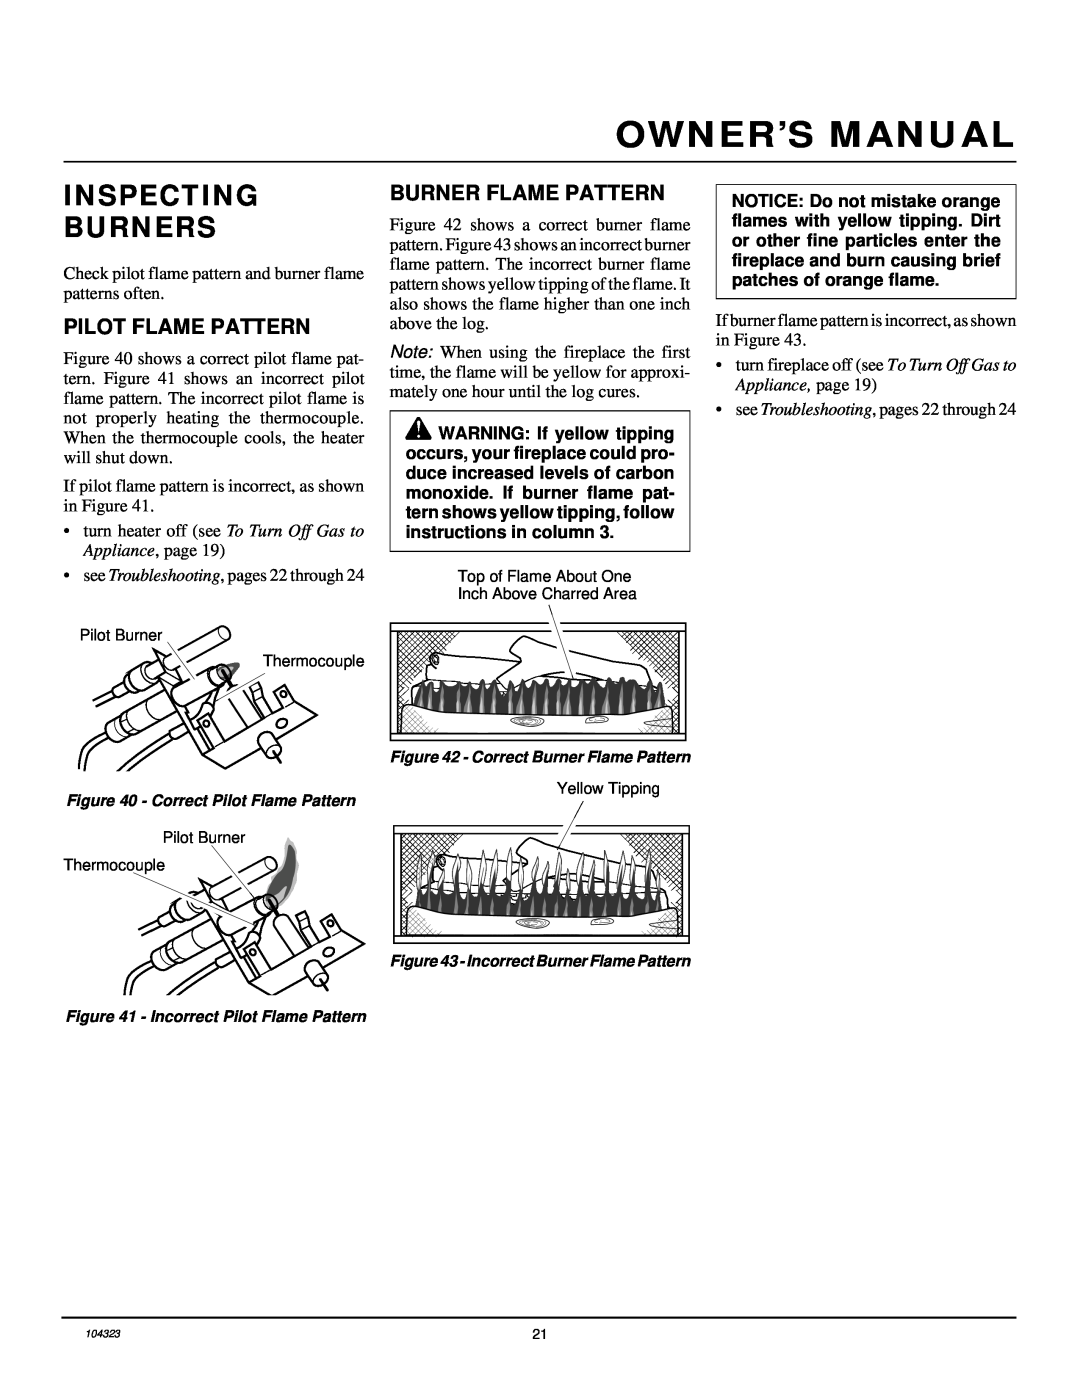 Desa VMH26PR installation manual Inspecting Burners, Pilot Flame Pattern, Burner Flame Pattern 